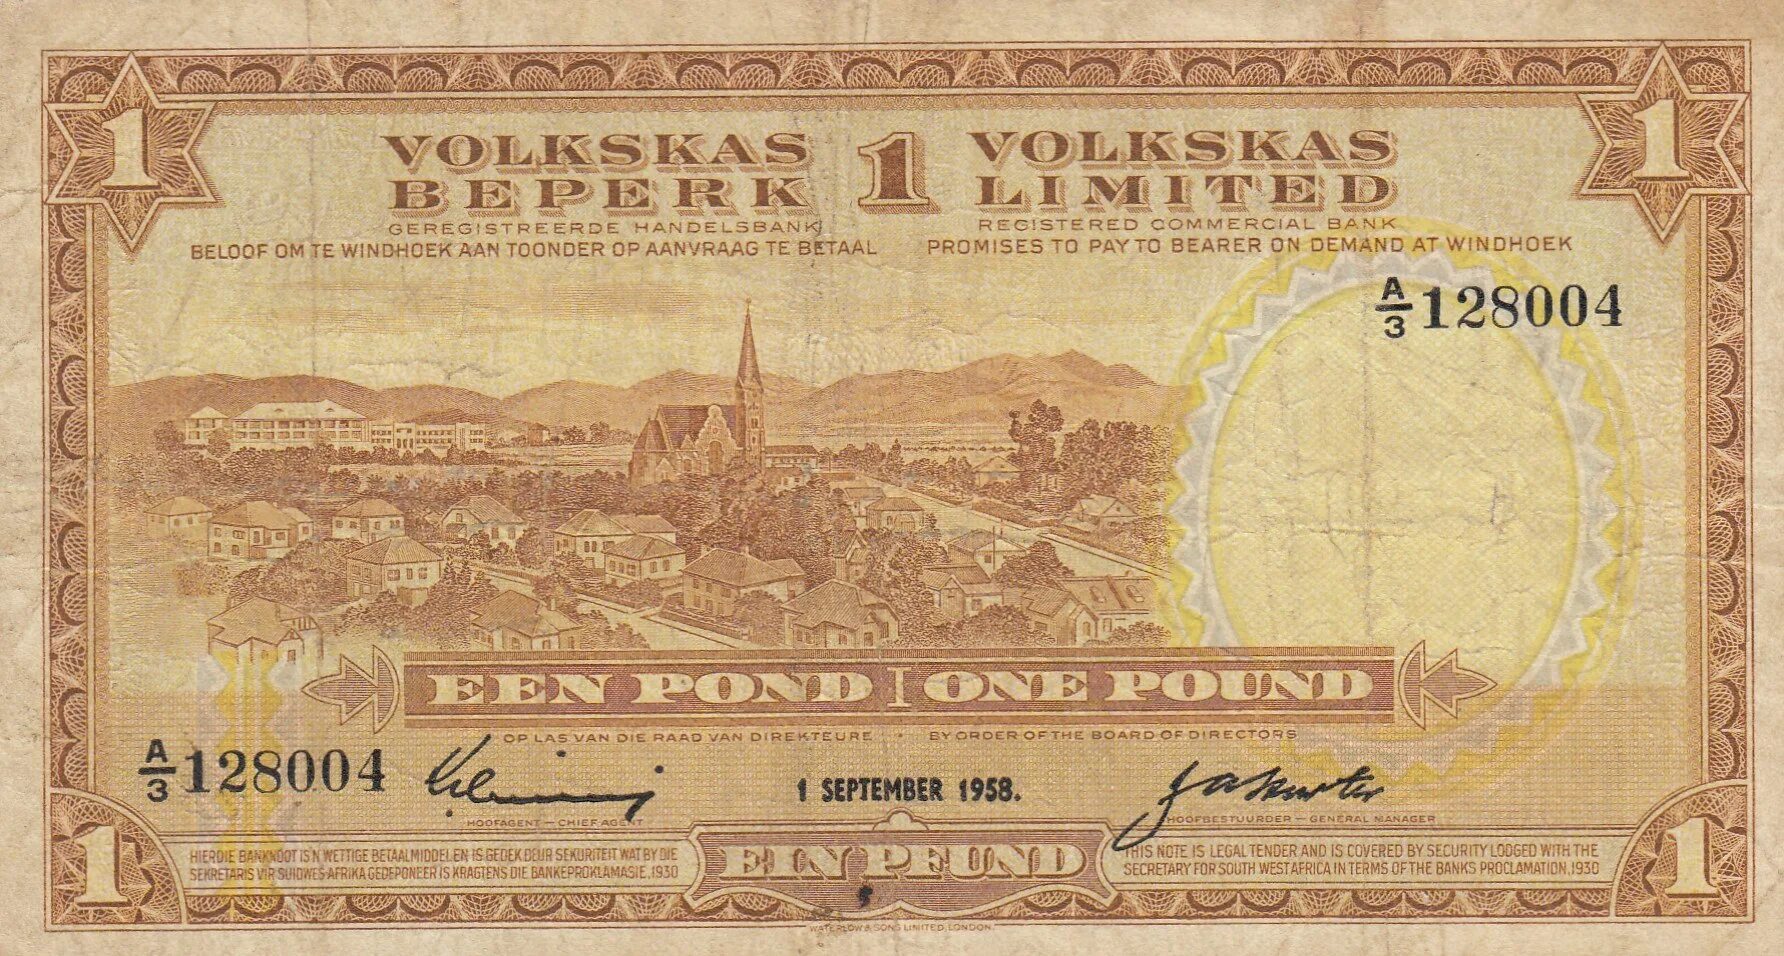 Banknoty Stran Mira. Деньги стран 50. 1 Фунт. Южная Африка. 1898.